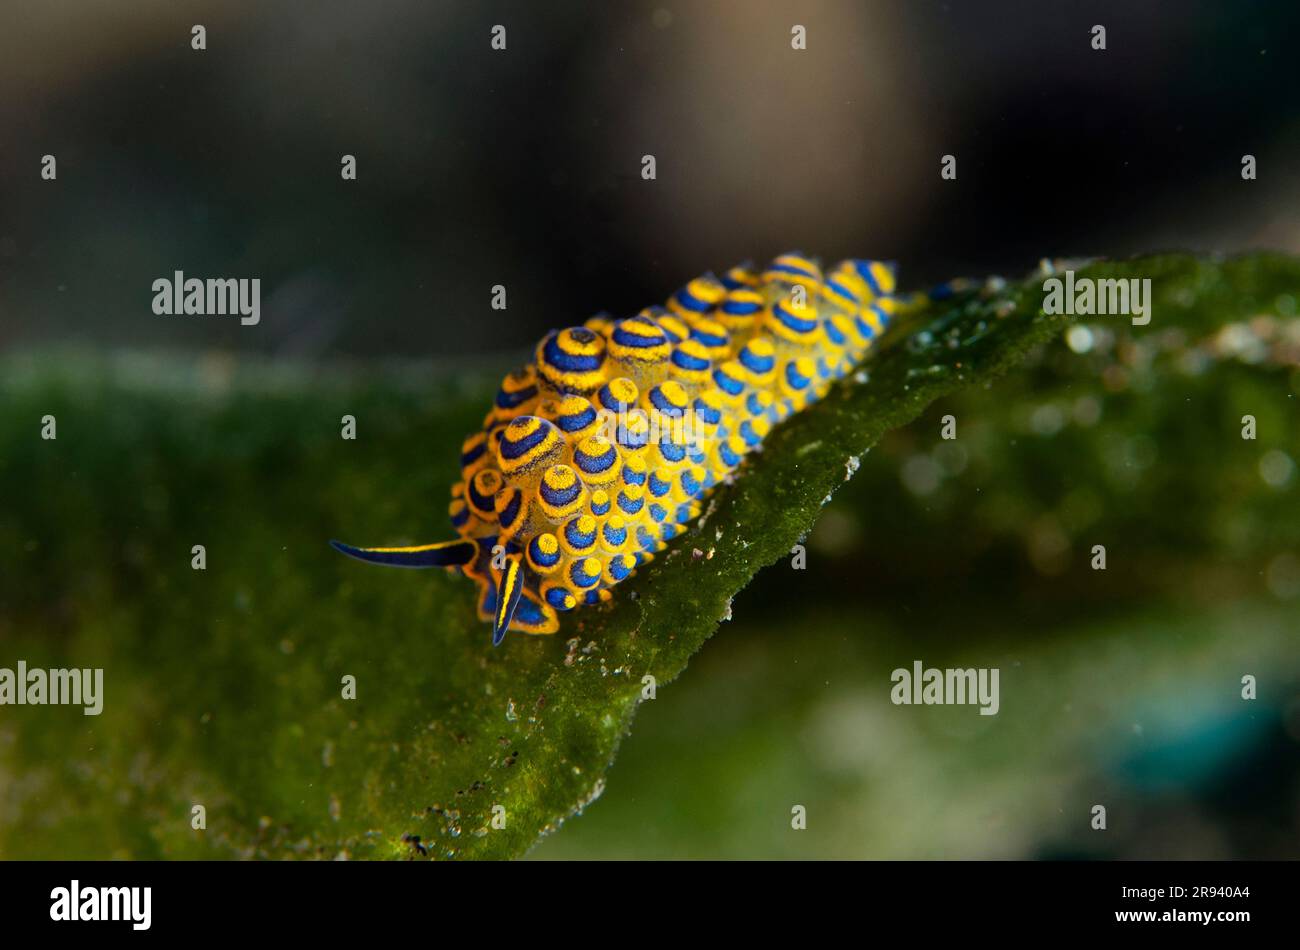 Ornate Stiliger Sea Slug, Stiliger ornatus, on  green algae, Avrainvillea sp, Bulakan Dive Site, Tulamben, Karangasem Regency, Bali, Indonesia Stock Photo